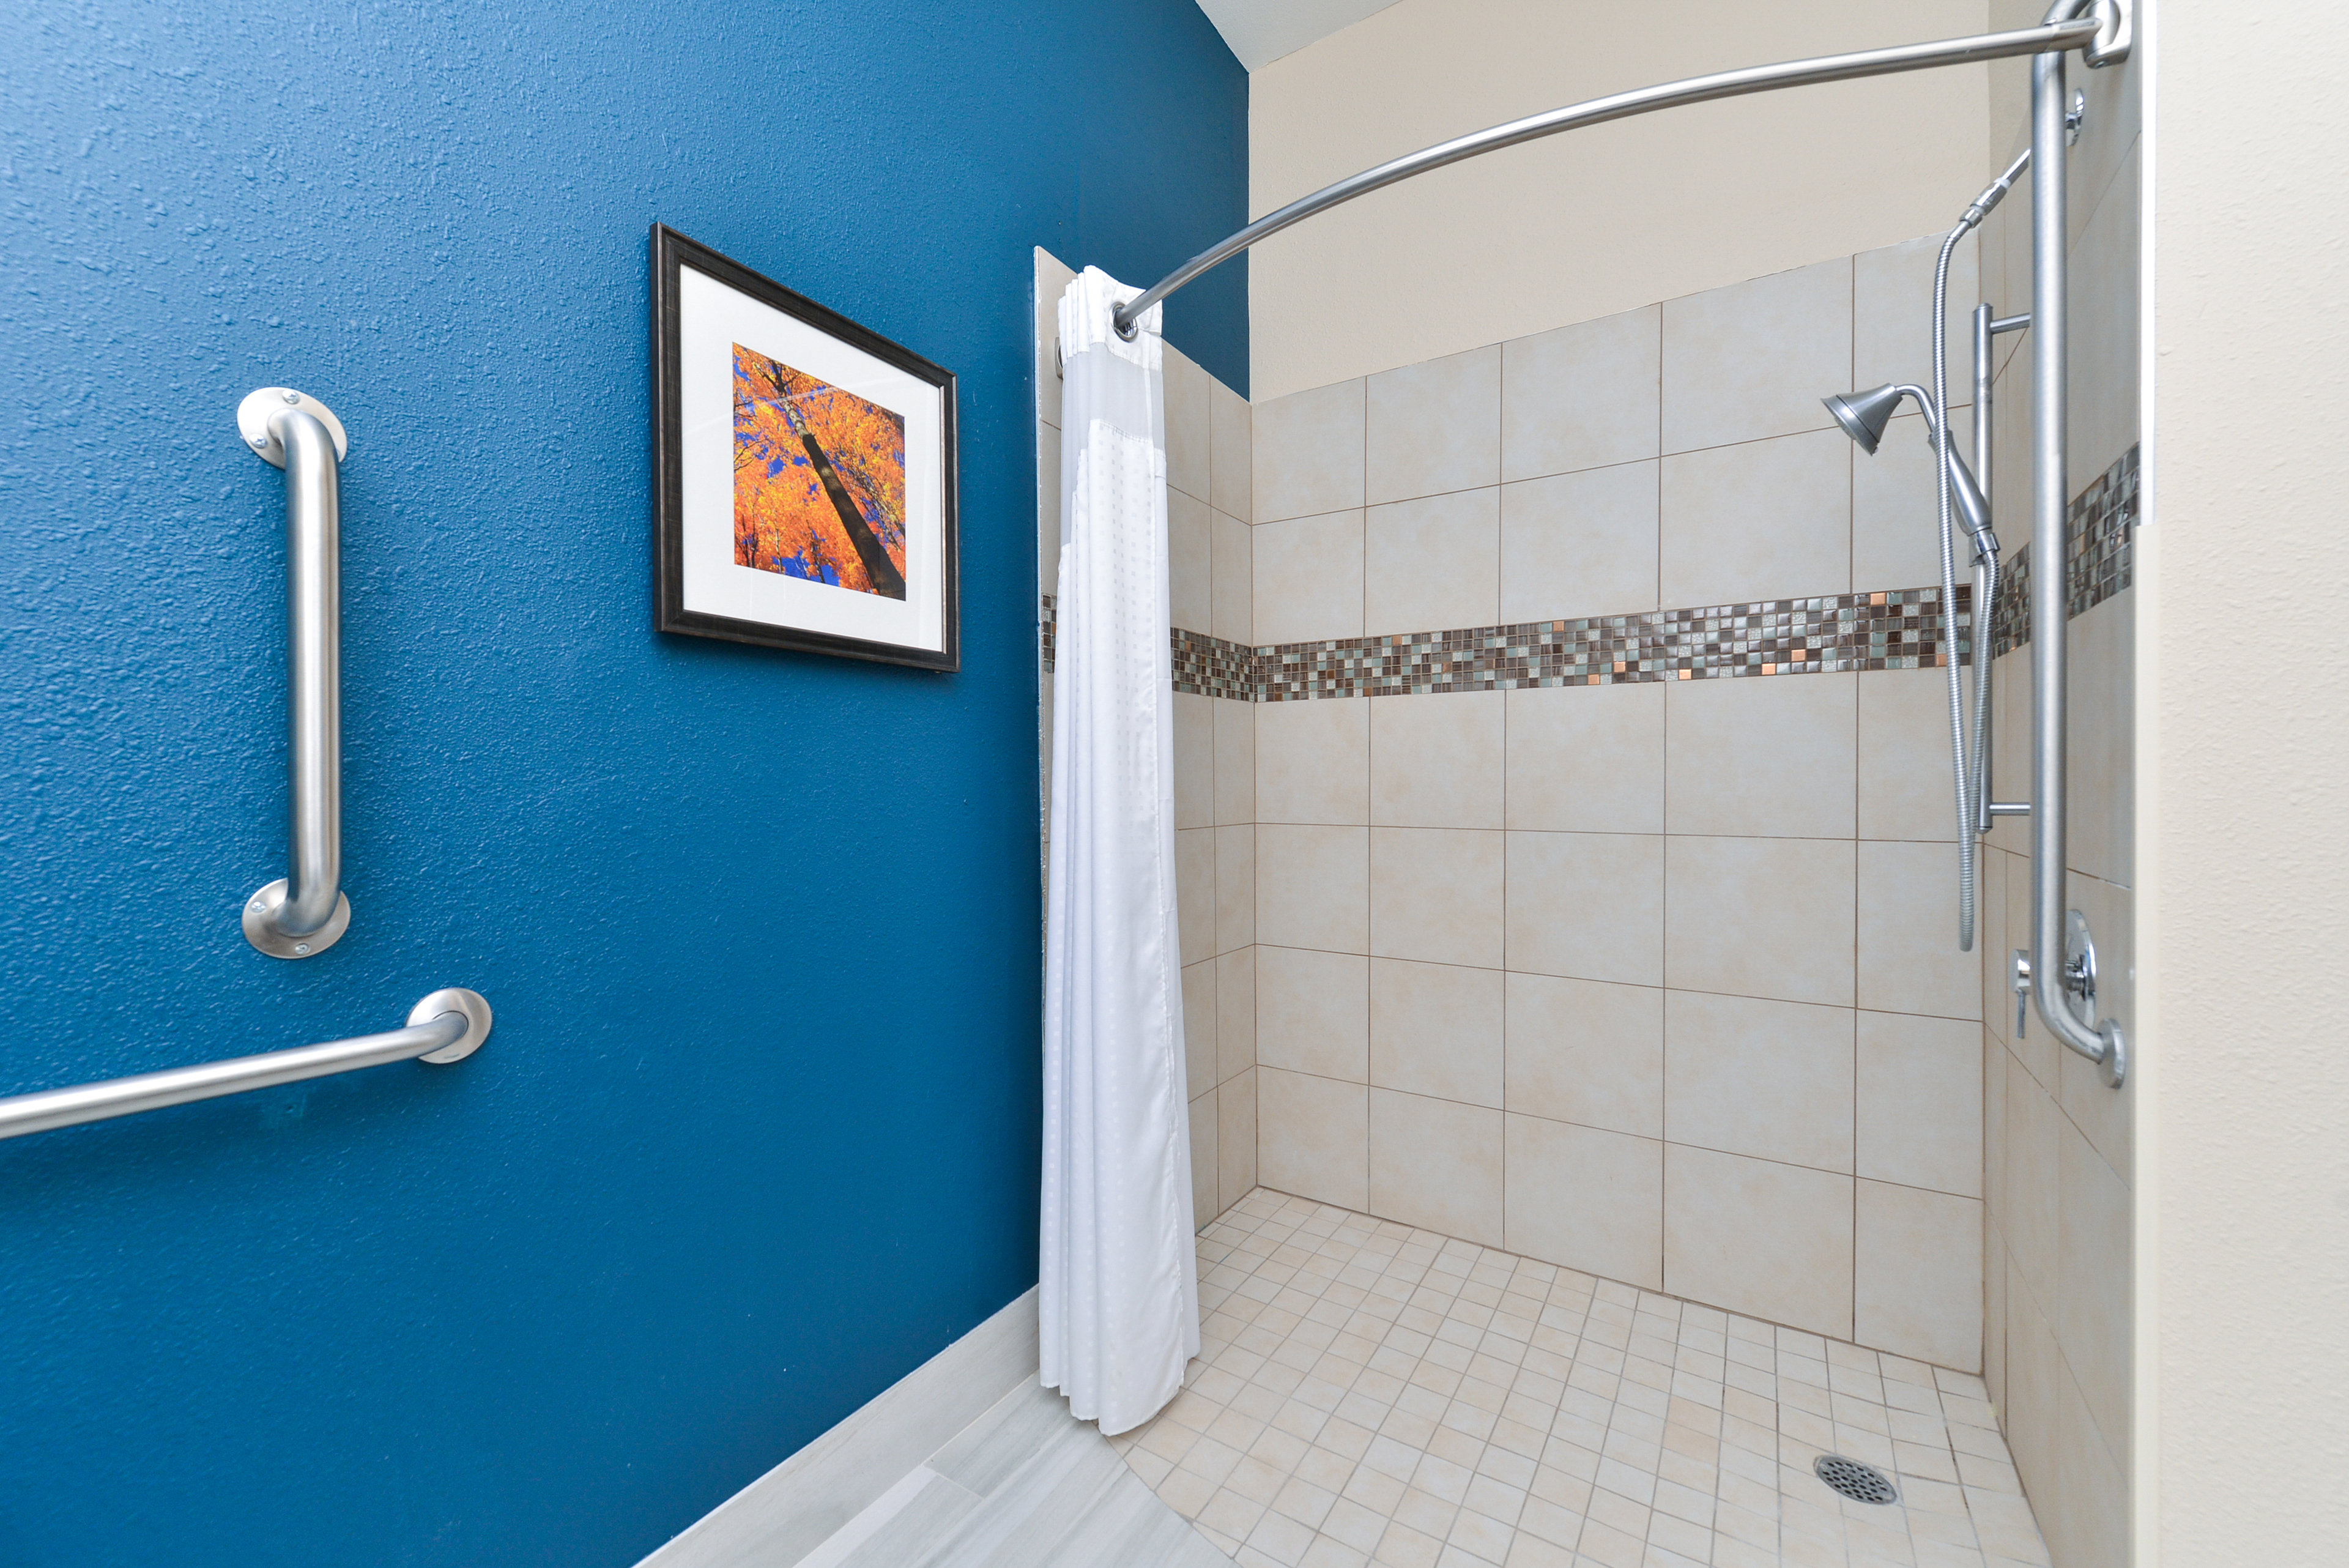 Our ADA walk in shower guest bathroom meets your needs when away.